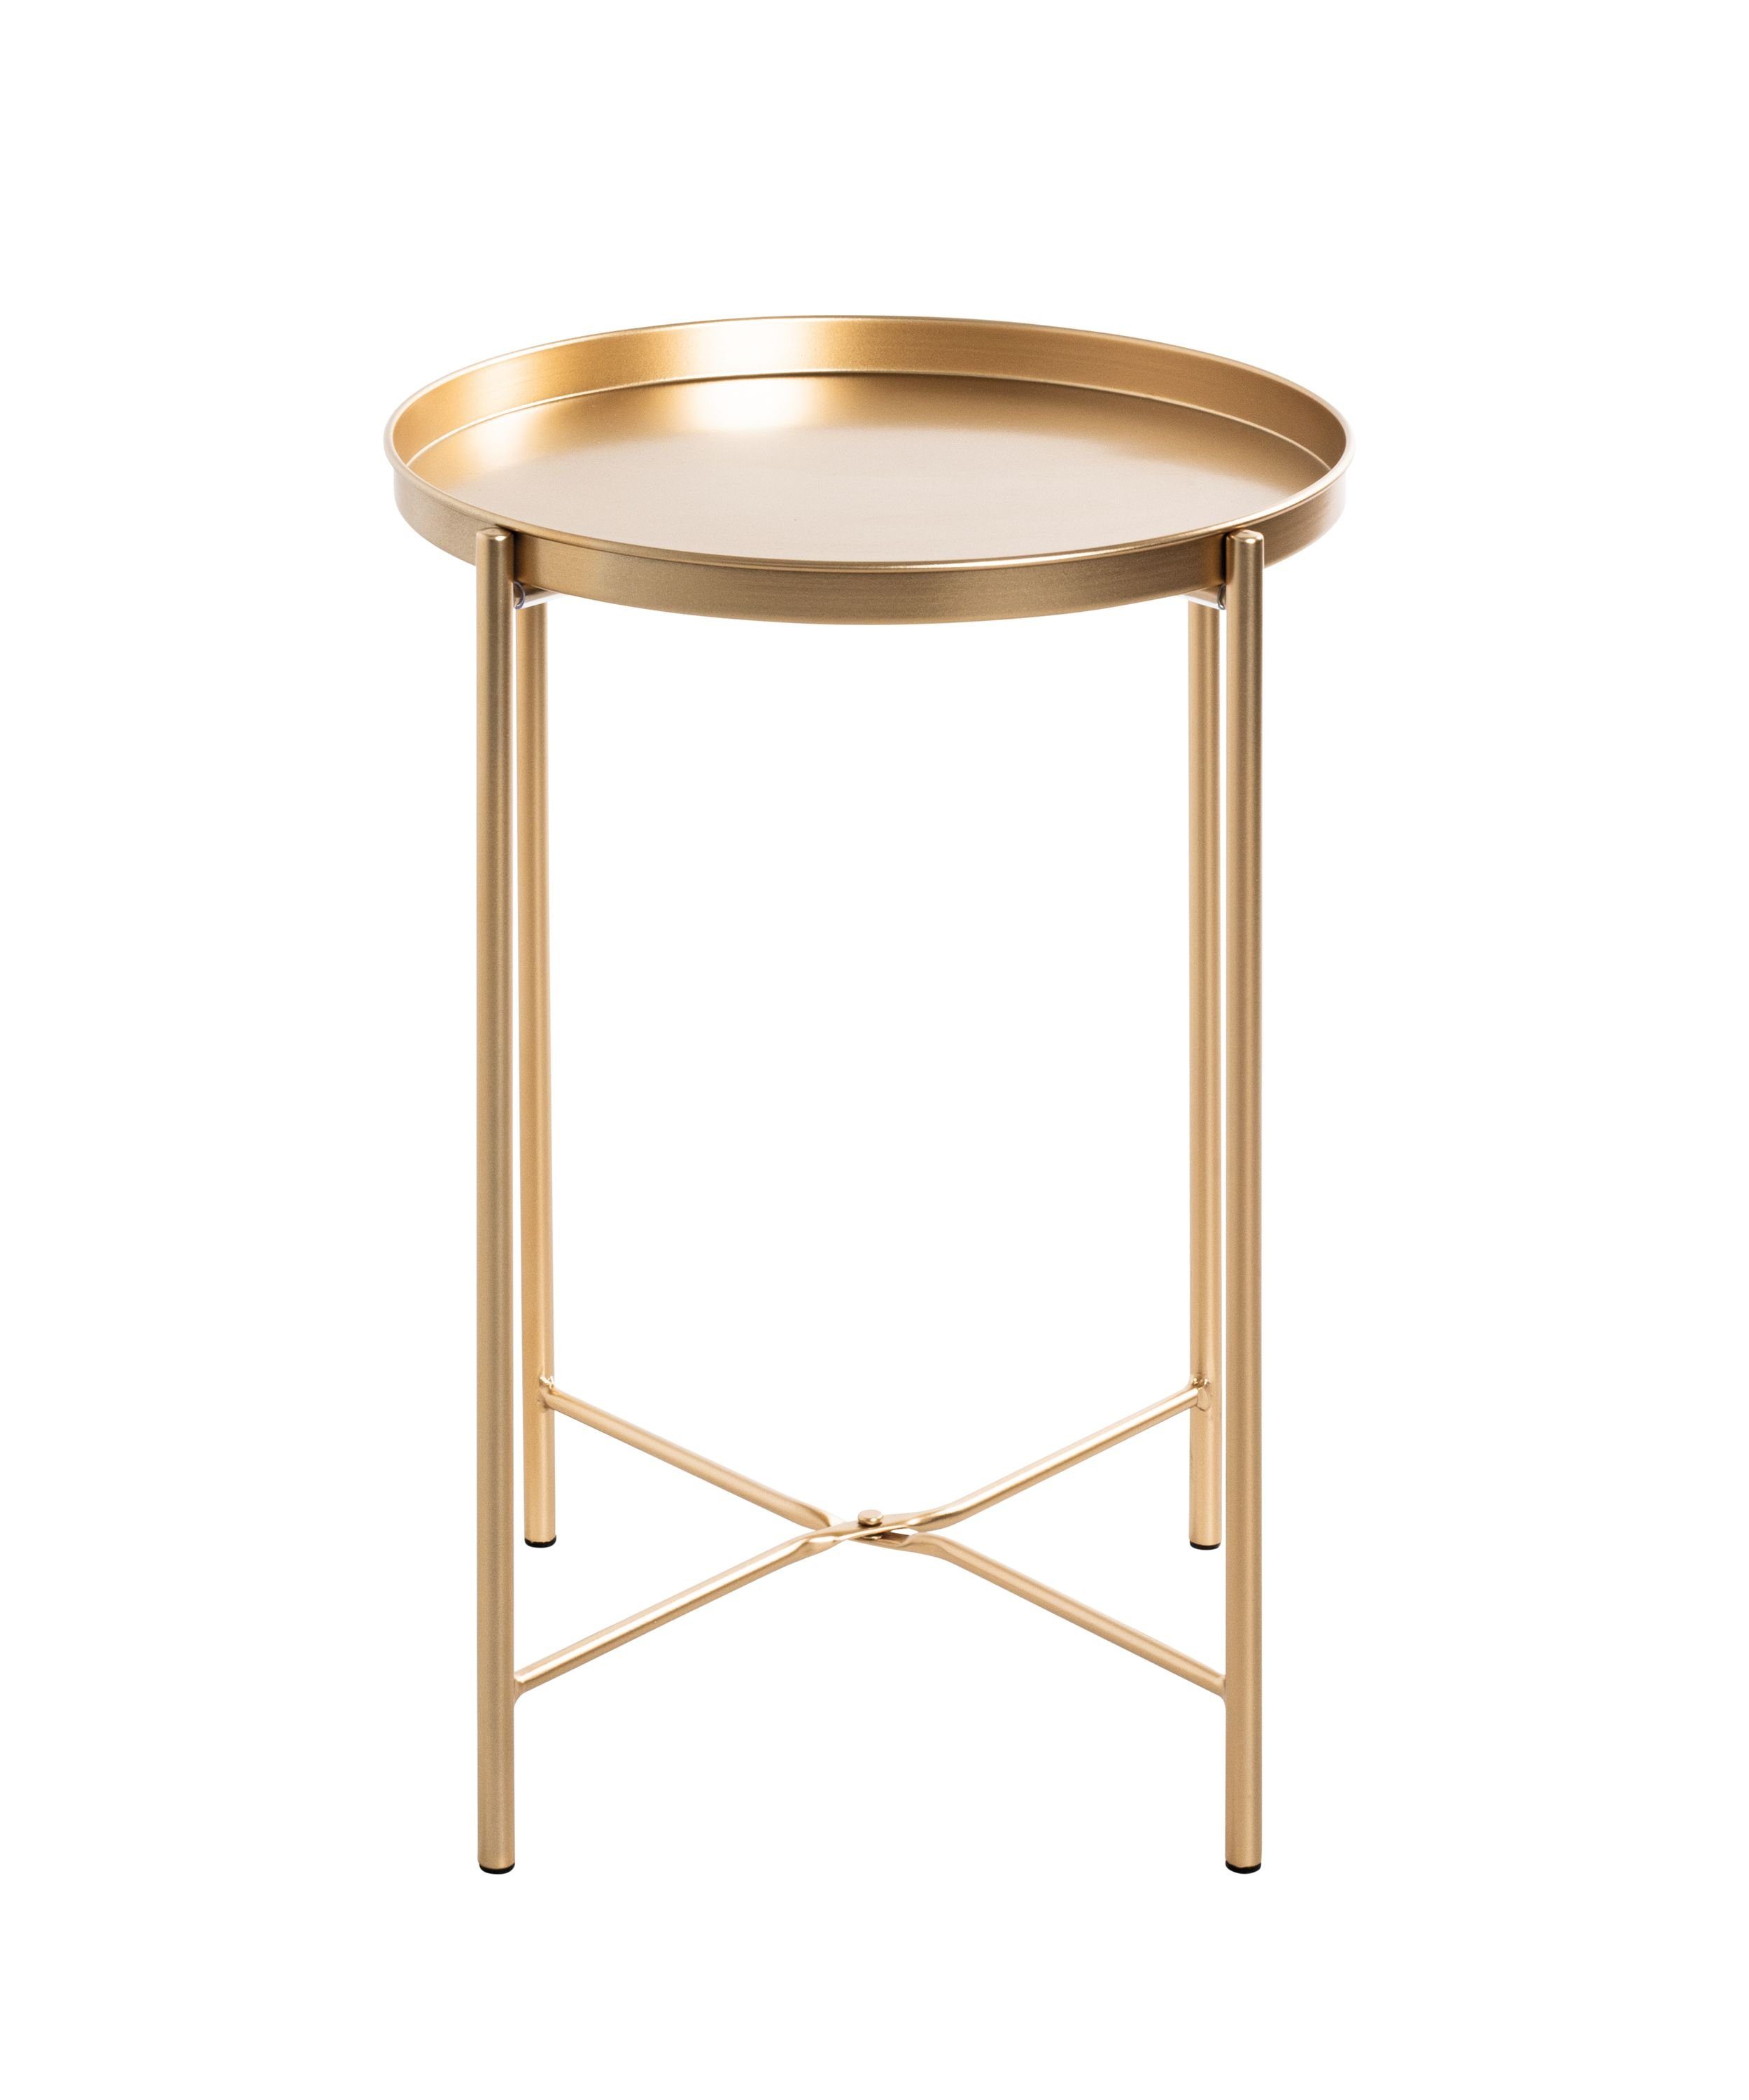 HAKU Beistelltisch Beistelltisch, cm (DH gold Kaffeetisch cm) Beistelltisch Möbel 39x50 39x50 HAKU DH